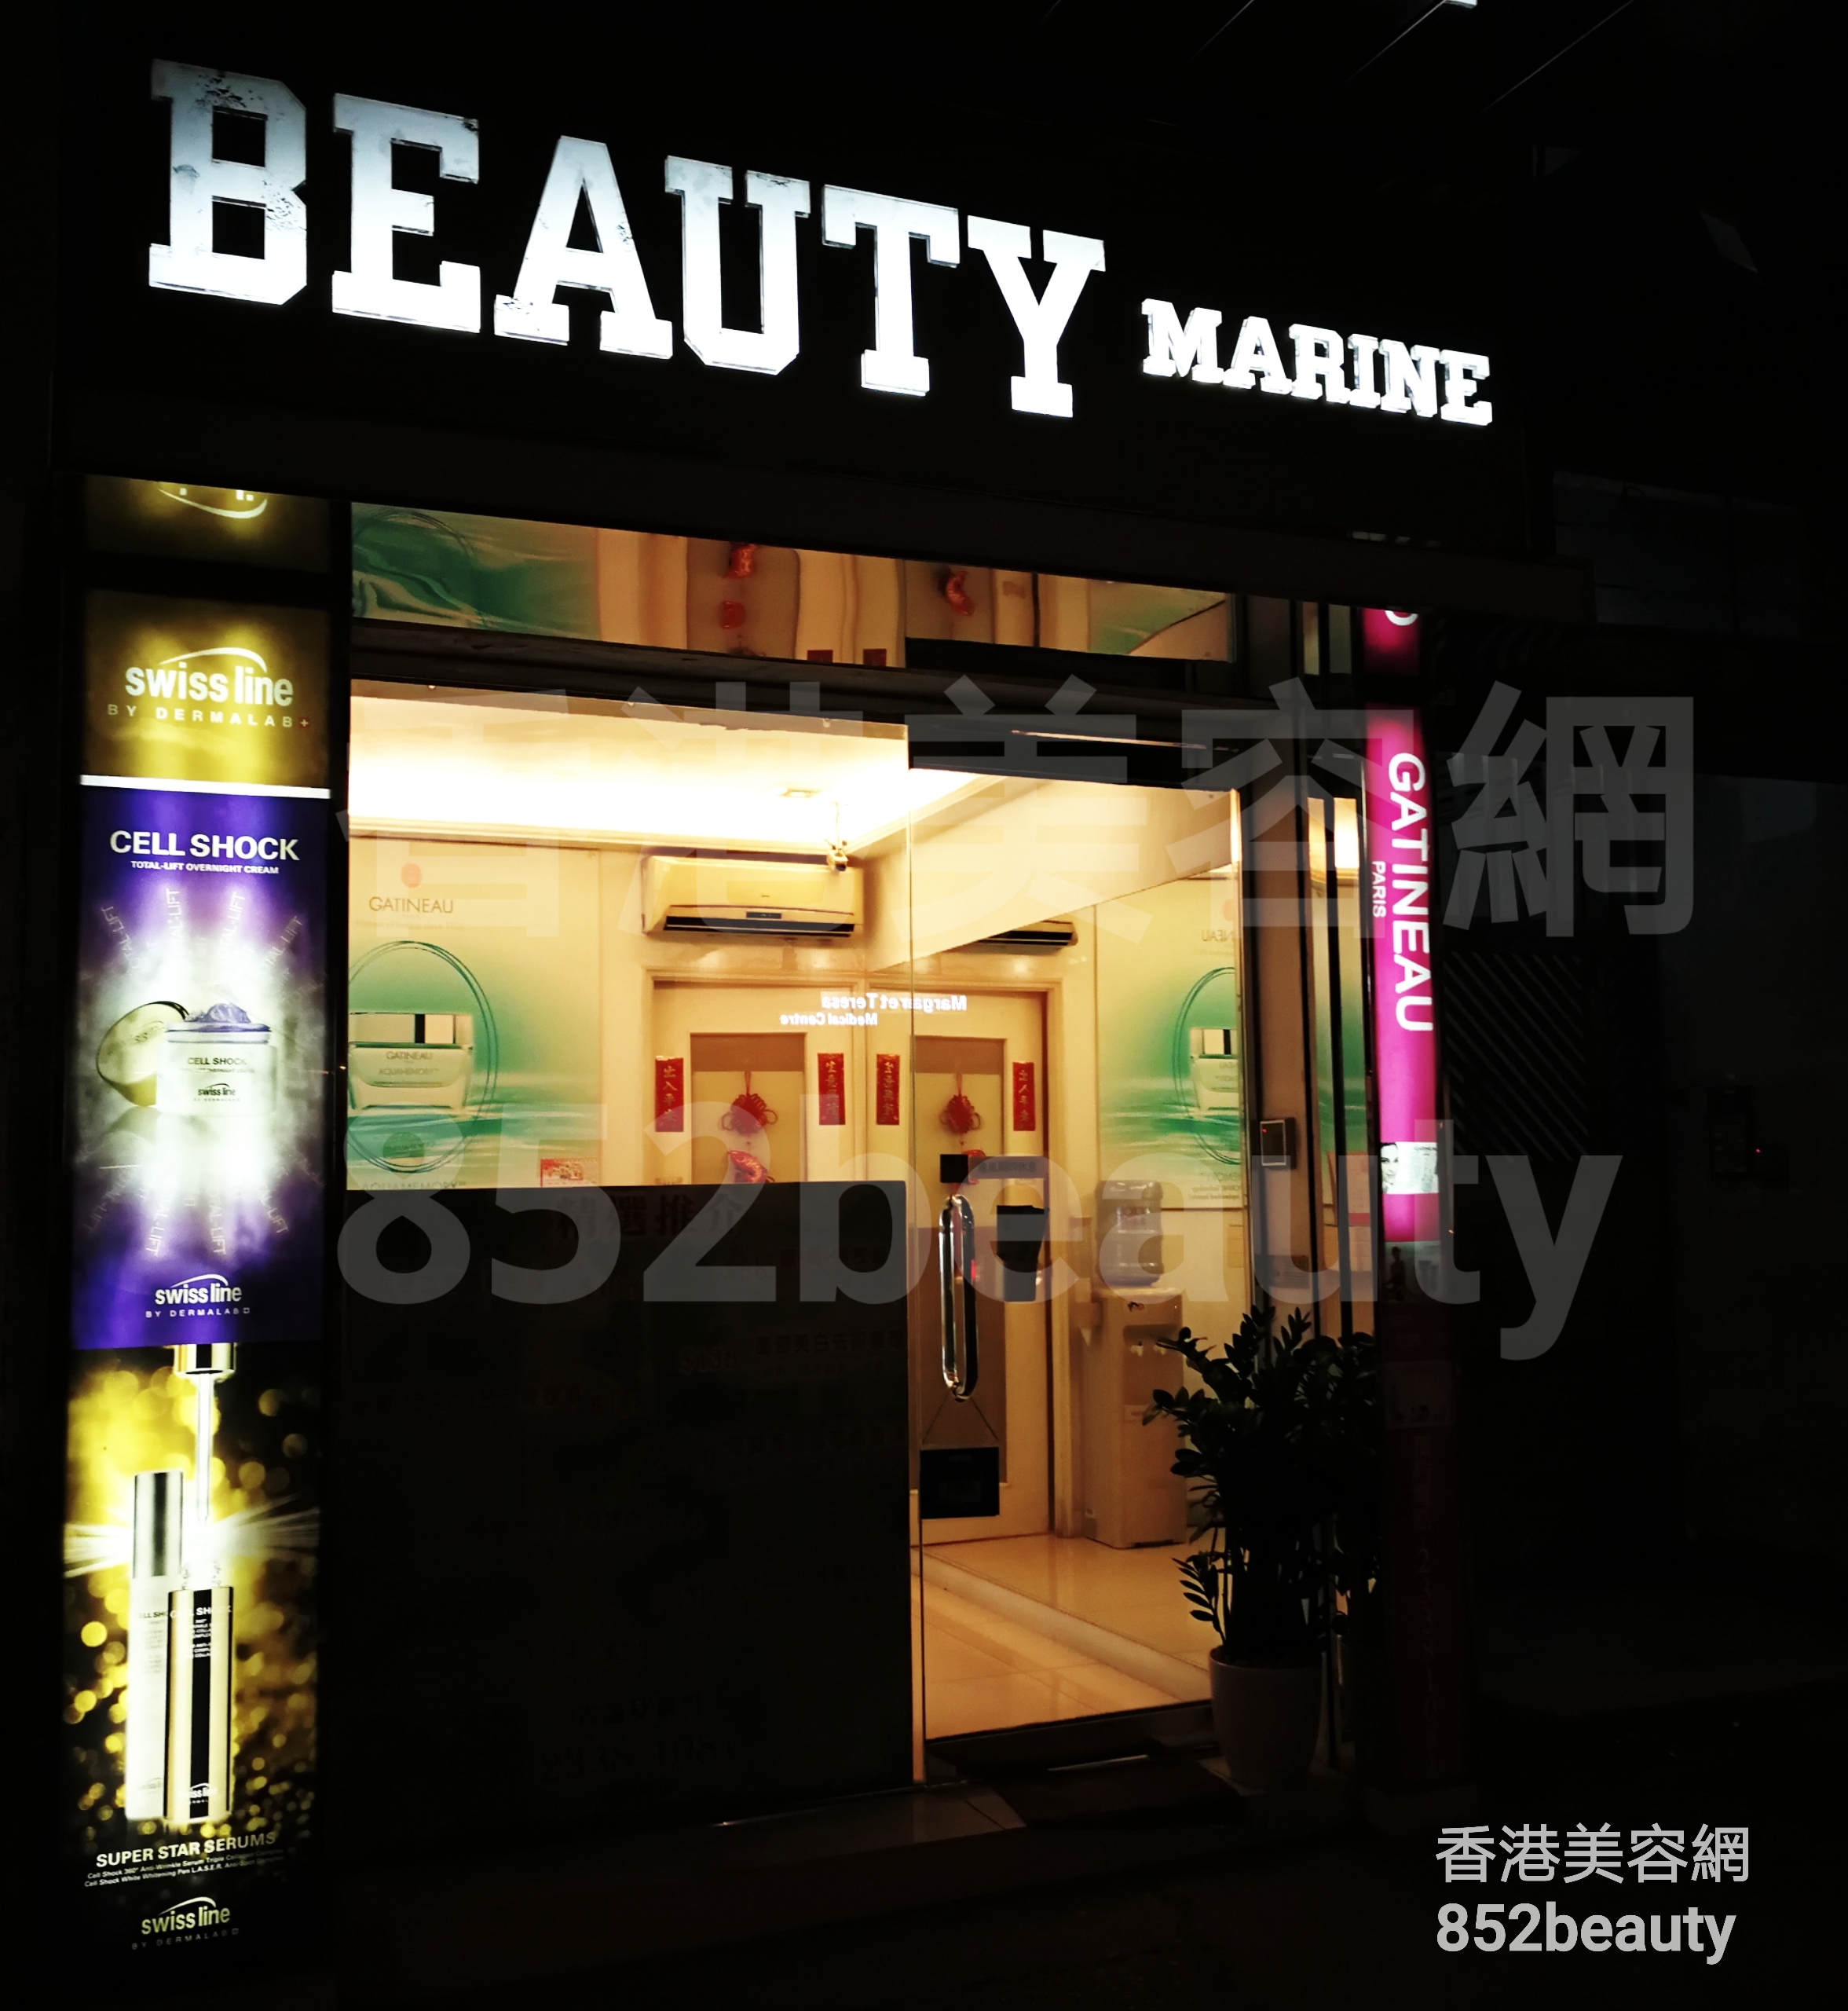 美容院: Beauty Marine